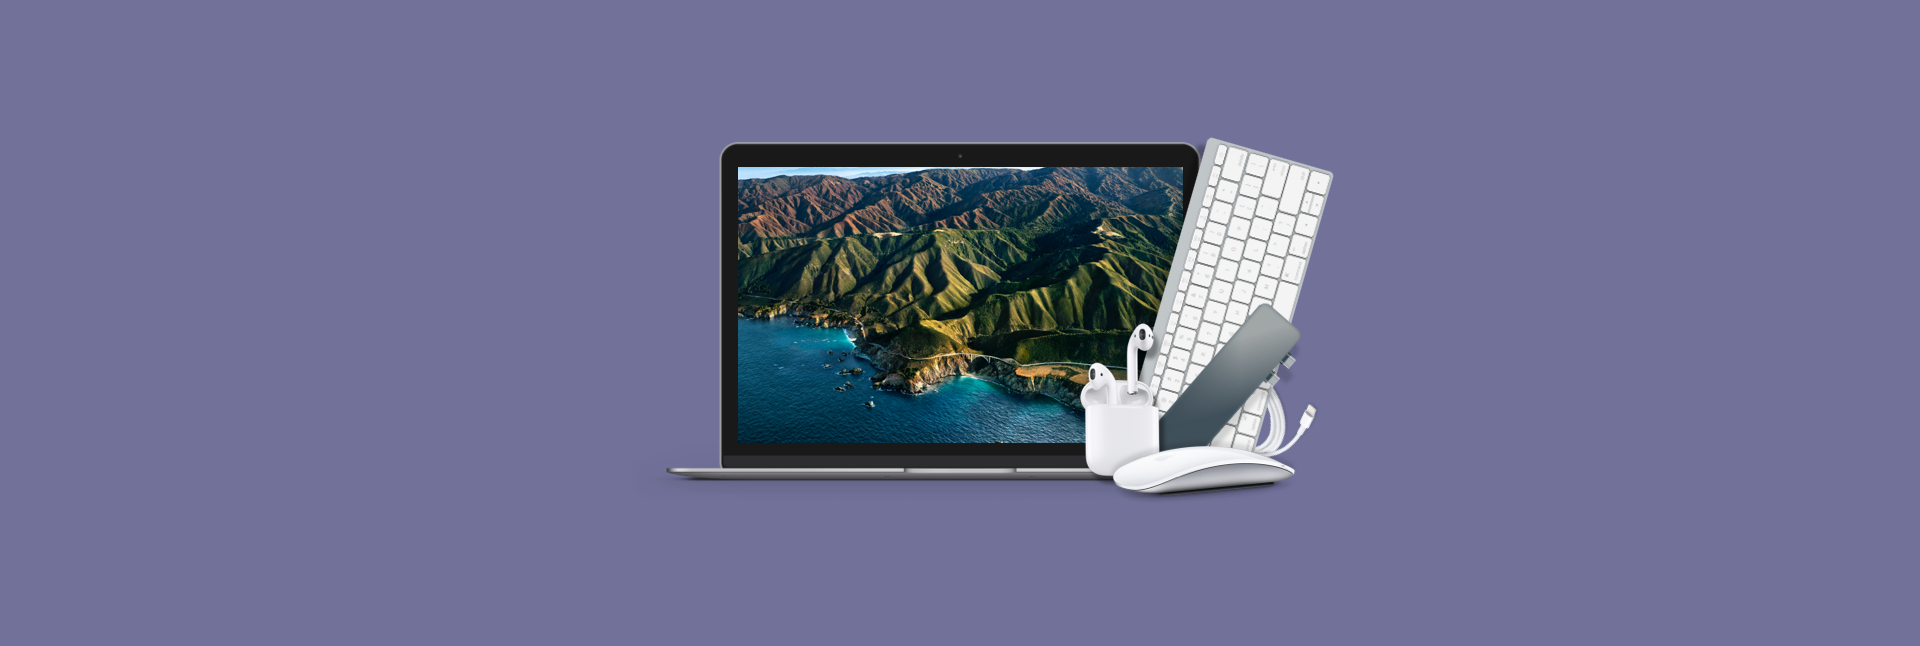 best gadgets for your mac laptop 2017